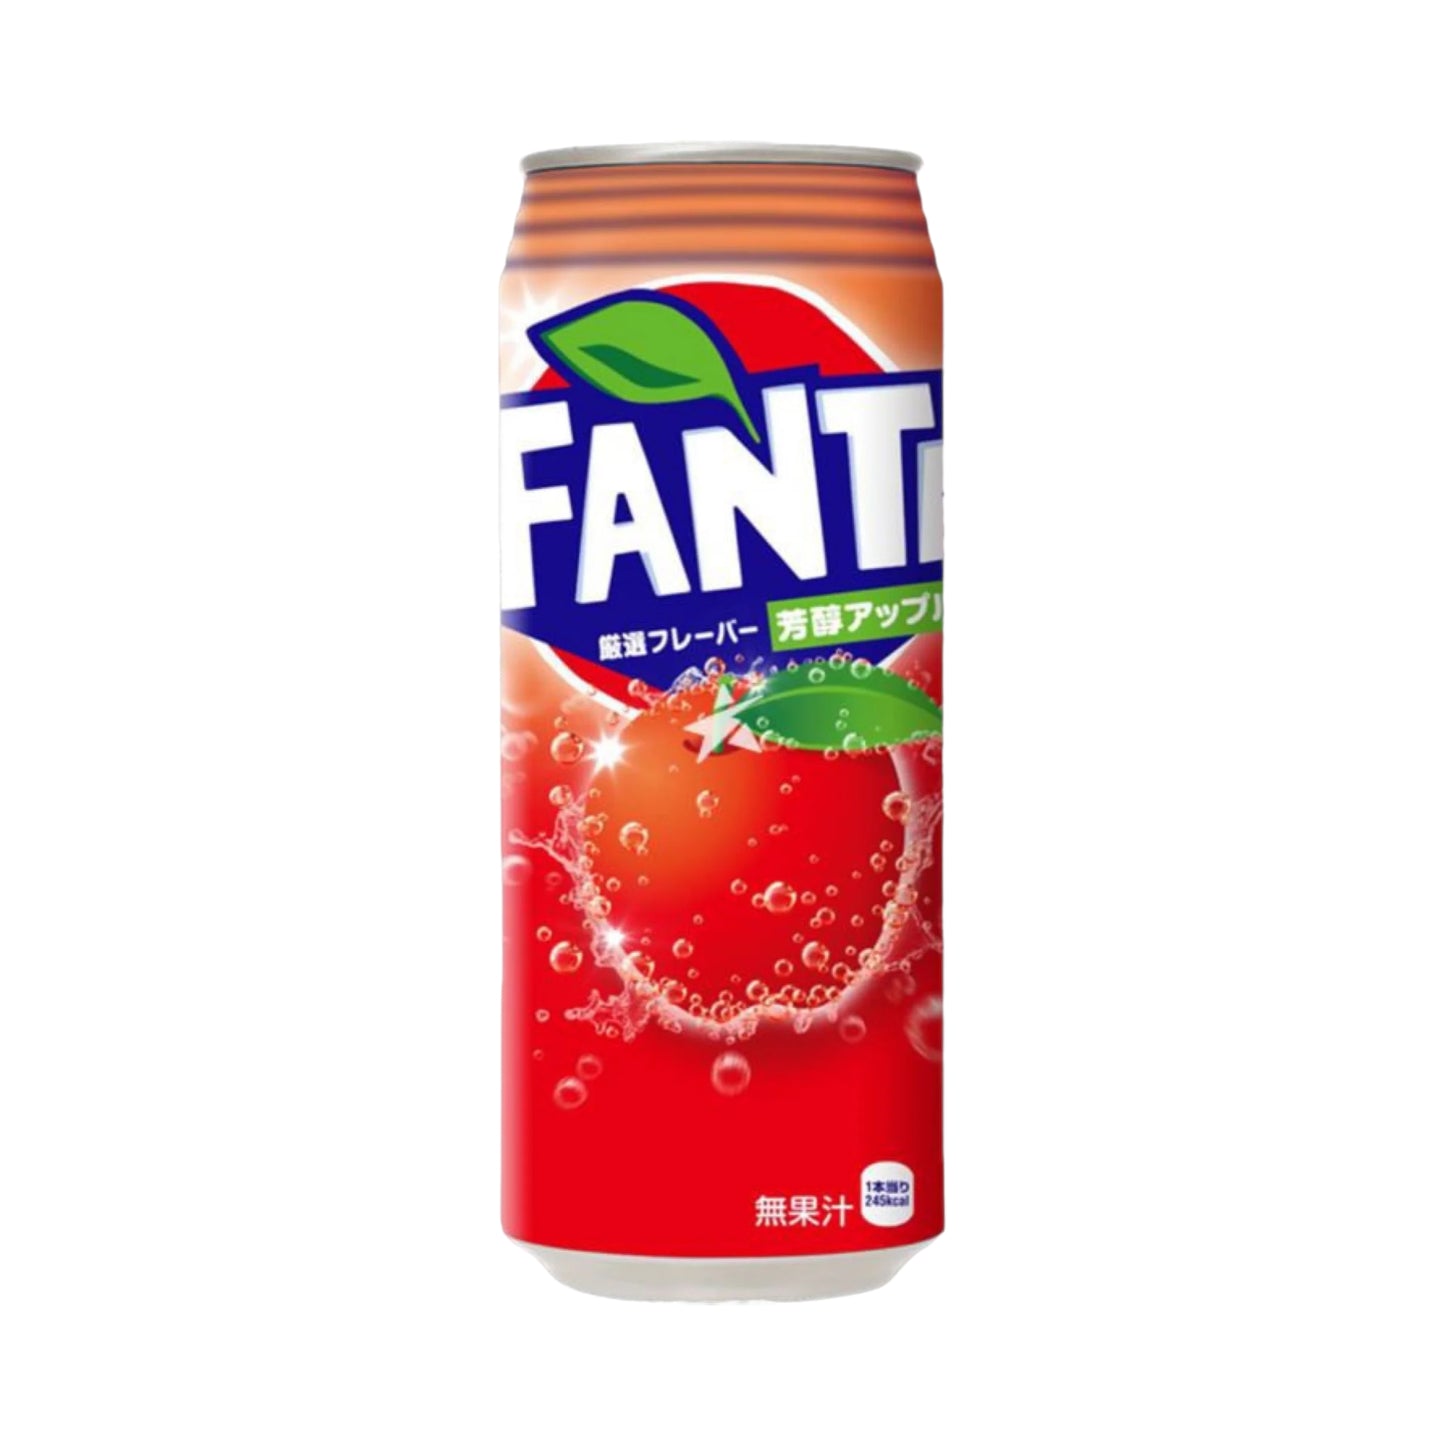 Fanta - Limited Edition Rich Apple Flavour 500ml (Japan)